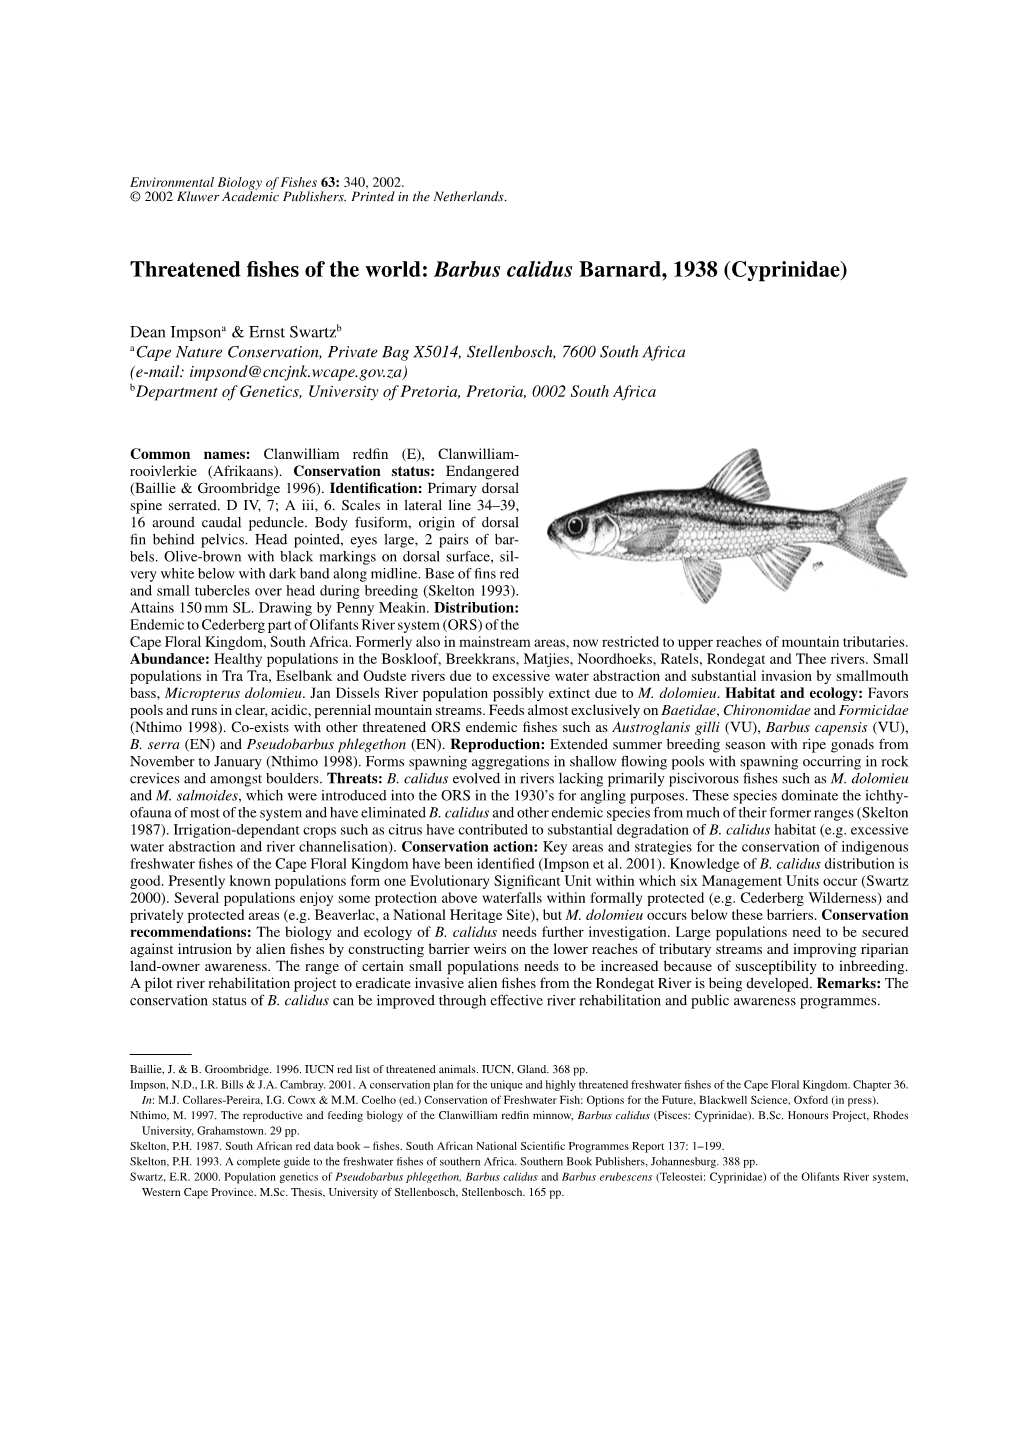 Threatened Fishes of the World: Barbus Calidus Barnard